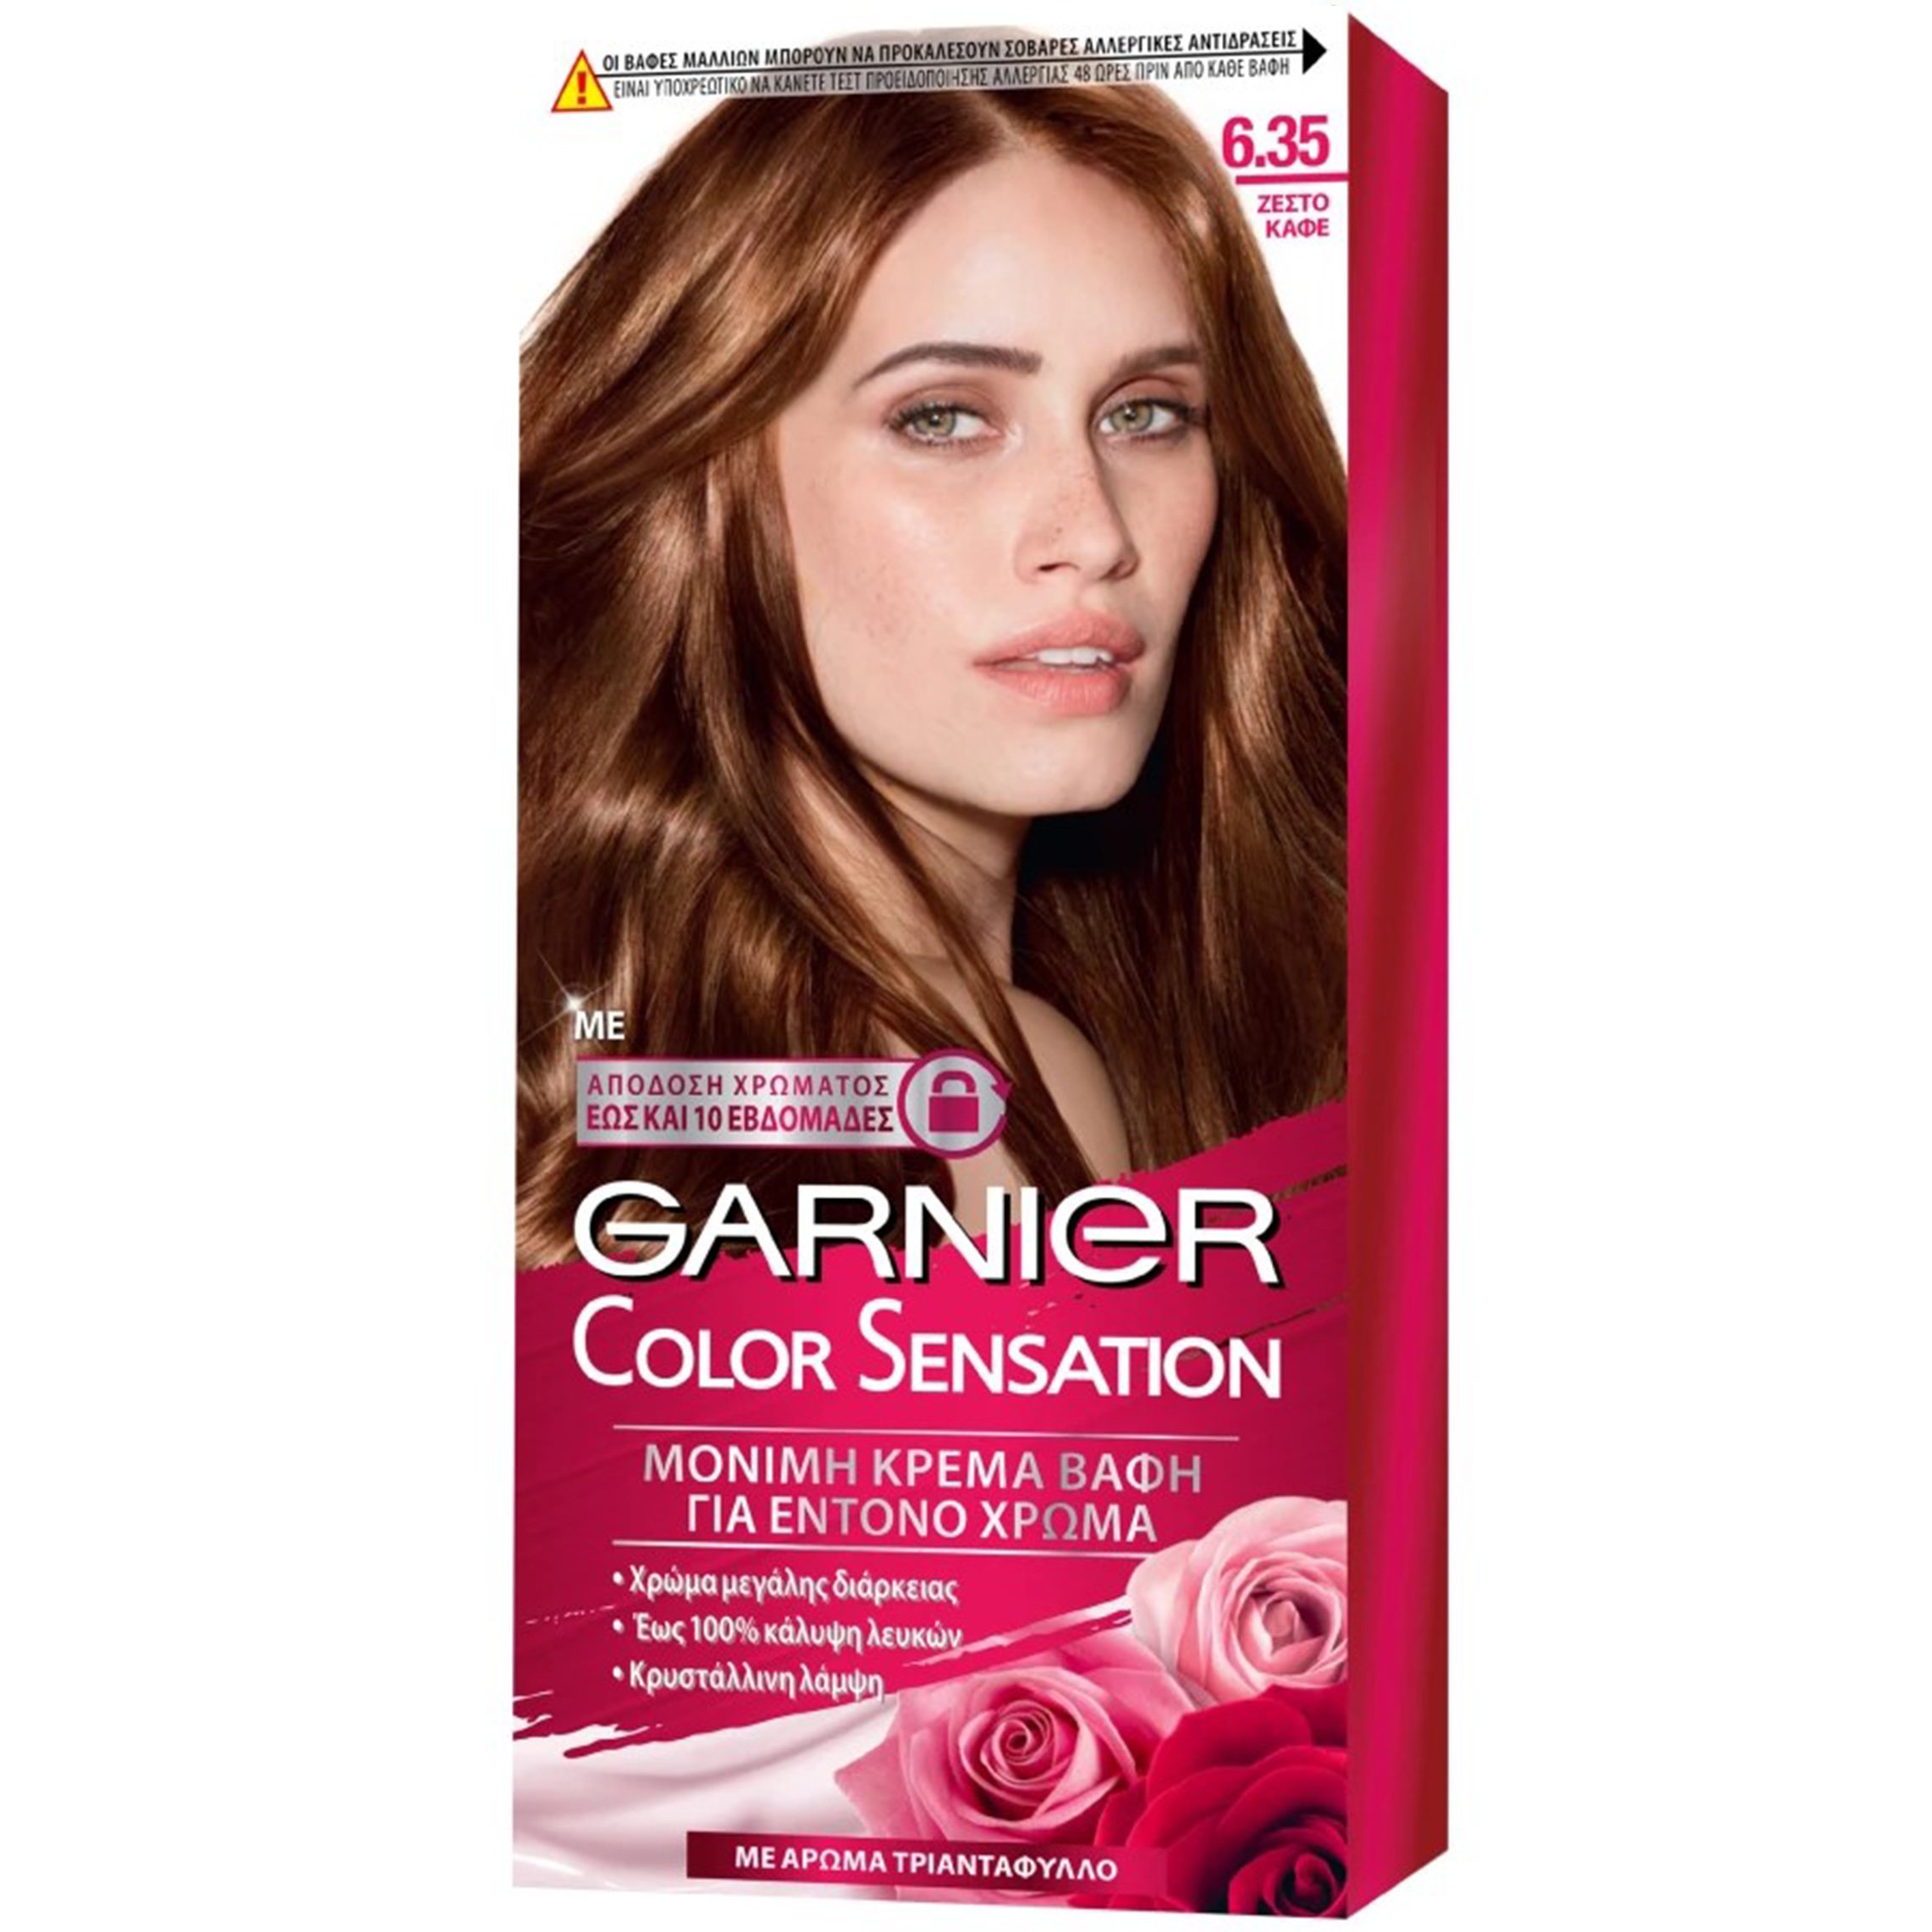 Garnier Color Sensation Permanent Hair Color Kit Μόνιμη Κρέμα Βαφή Μαλλιών με Άρωμα Τριαντάφυλλο 1 Τεμάχιο – 6.35 Ζεστό Καφέ